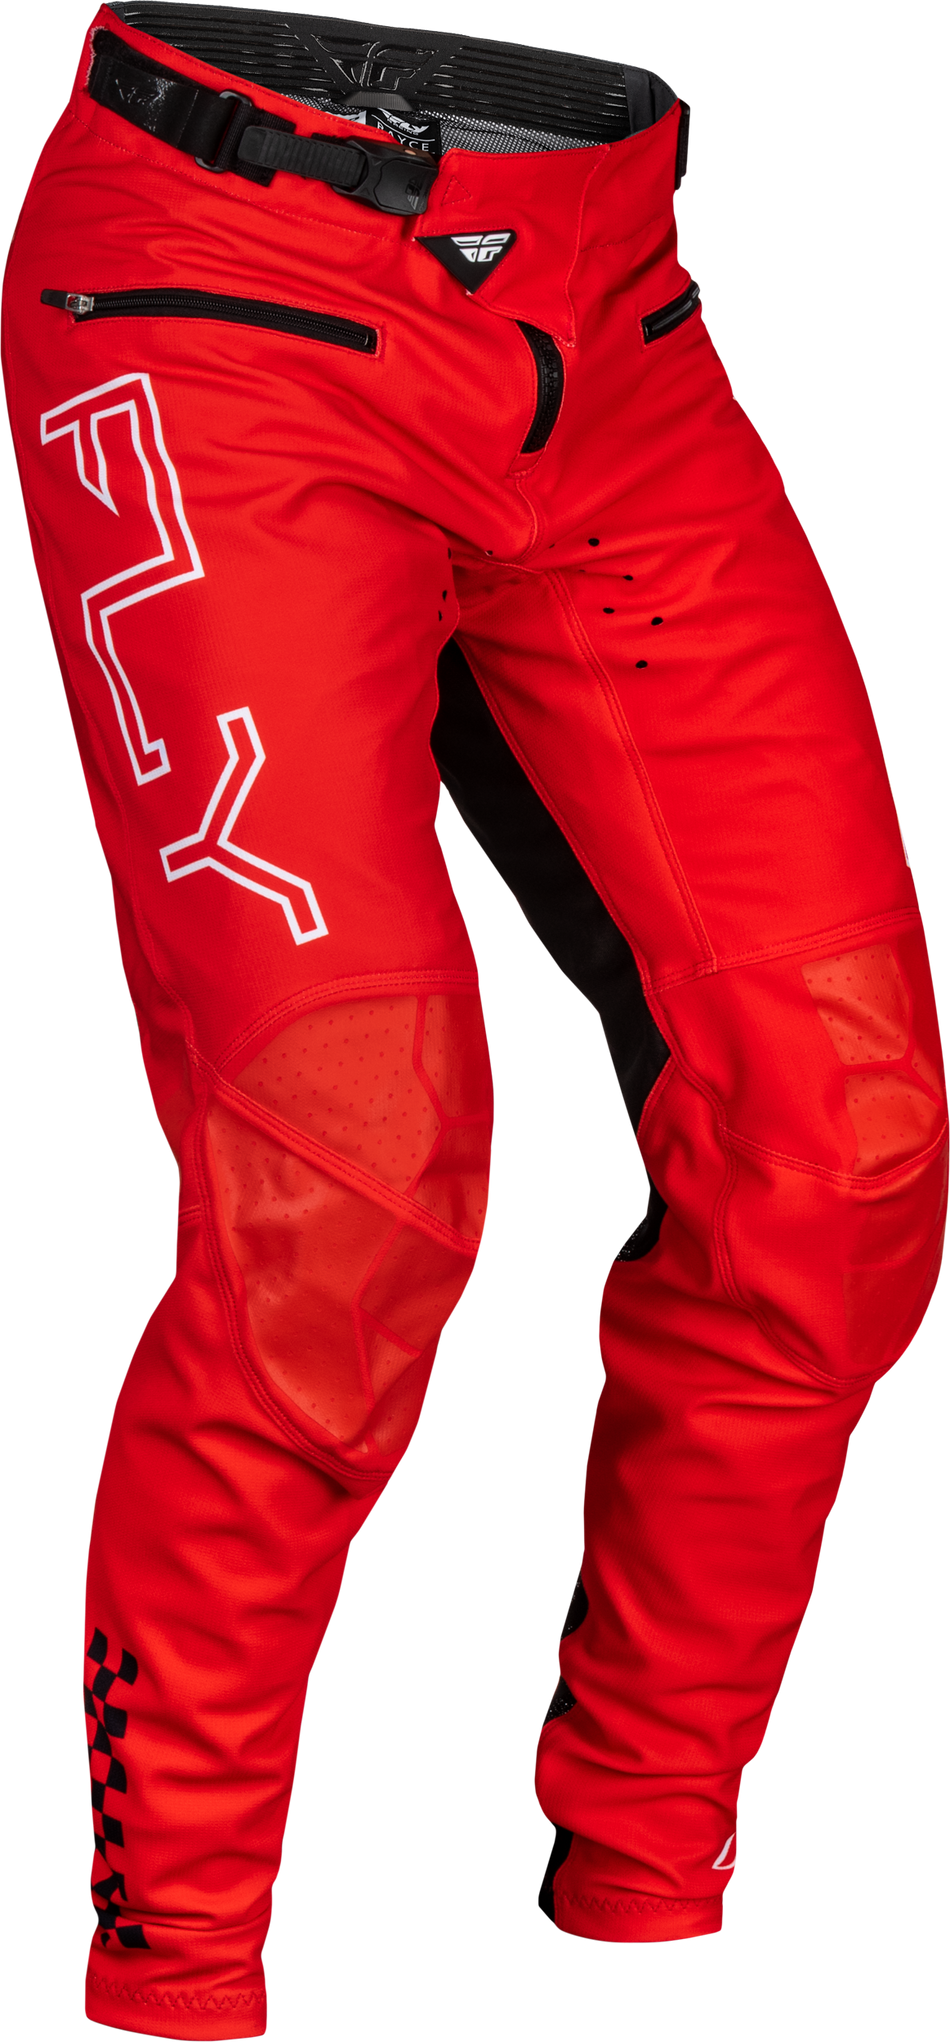 FLY RACING Rayce Bicycle Pants Red Sz 38 377-06338